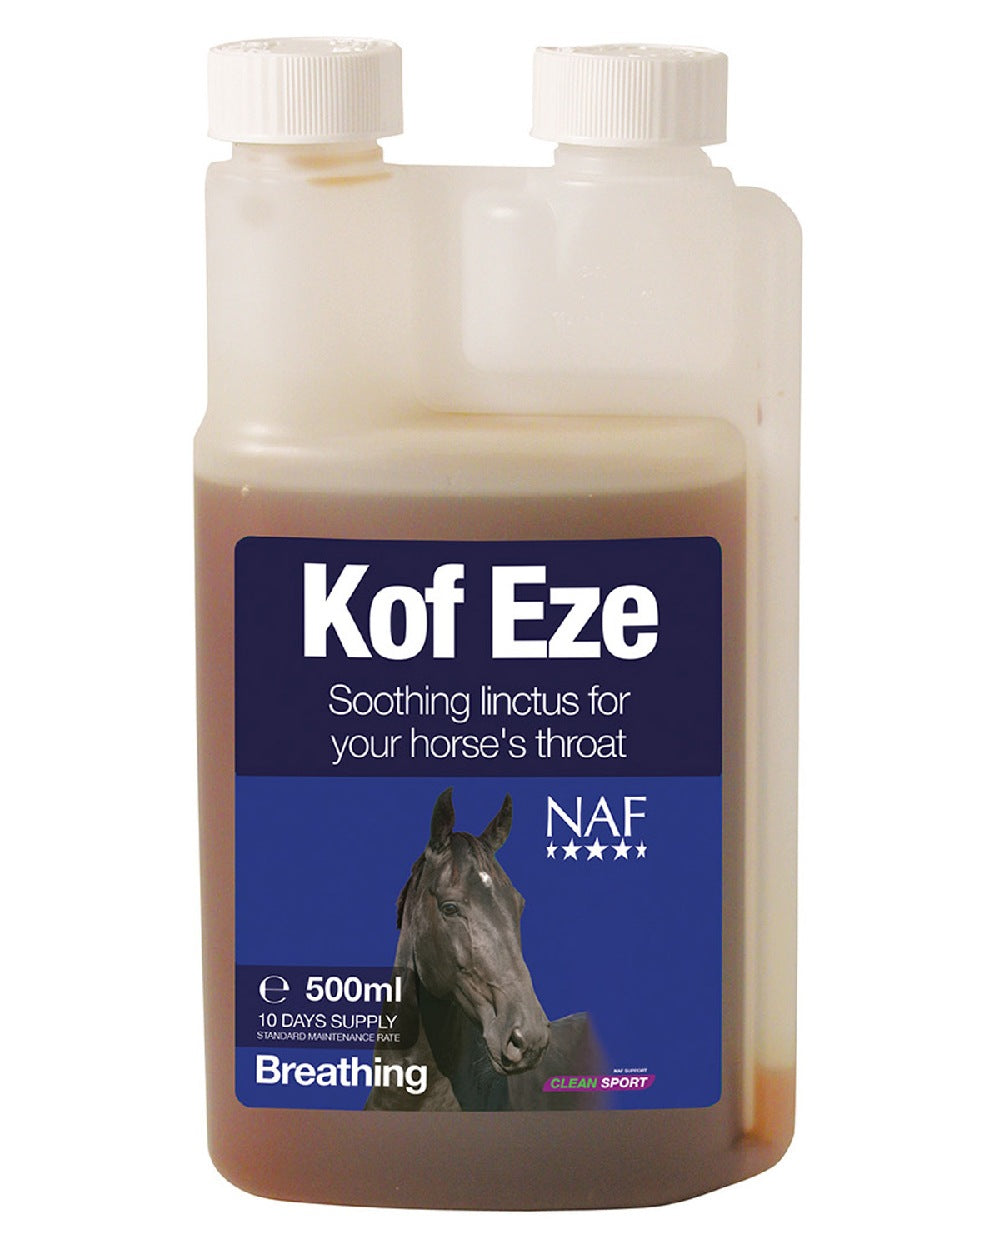 NAF Kof-Eze on white background